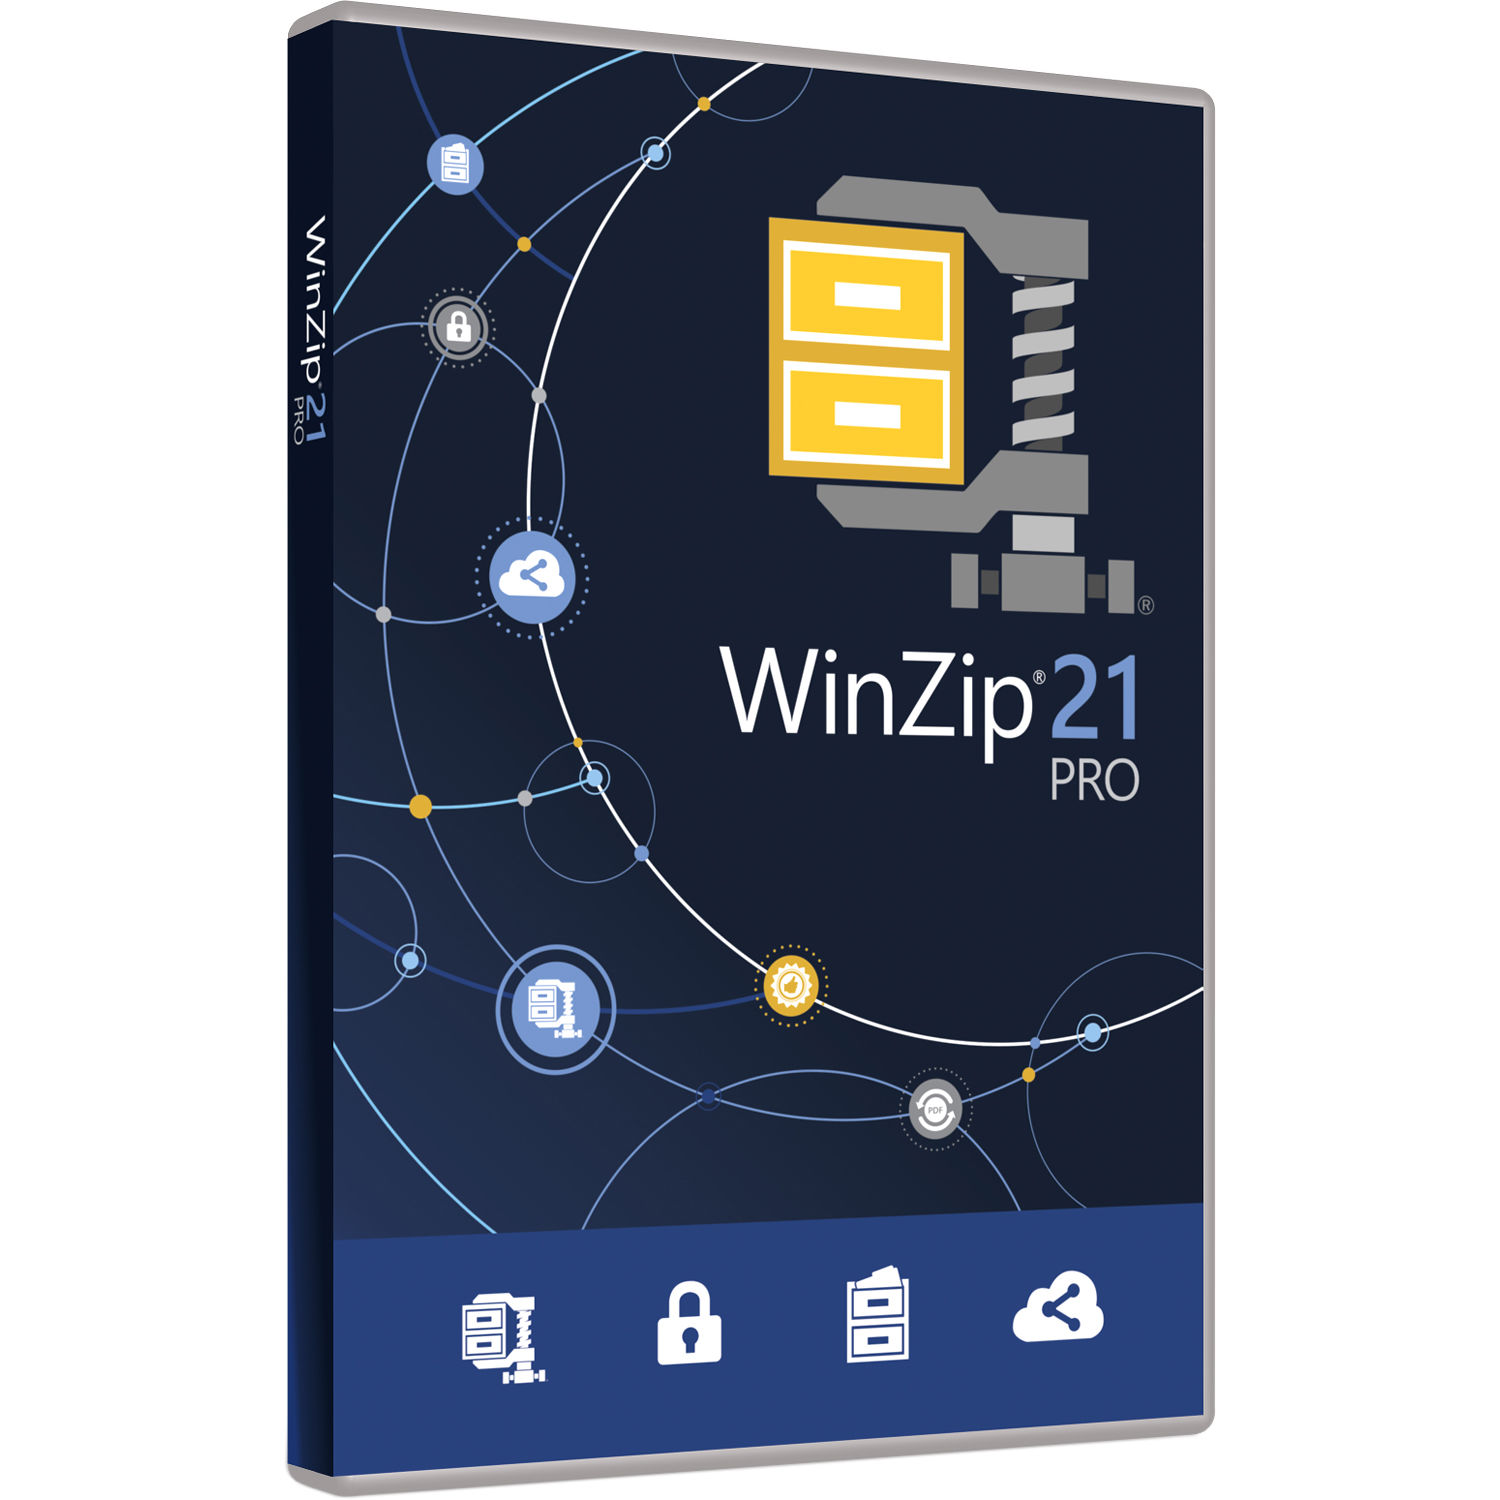 winzip for windows 7 32 bit free download